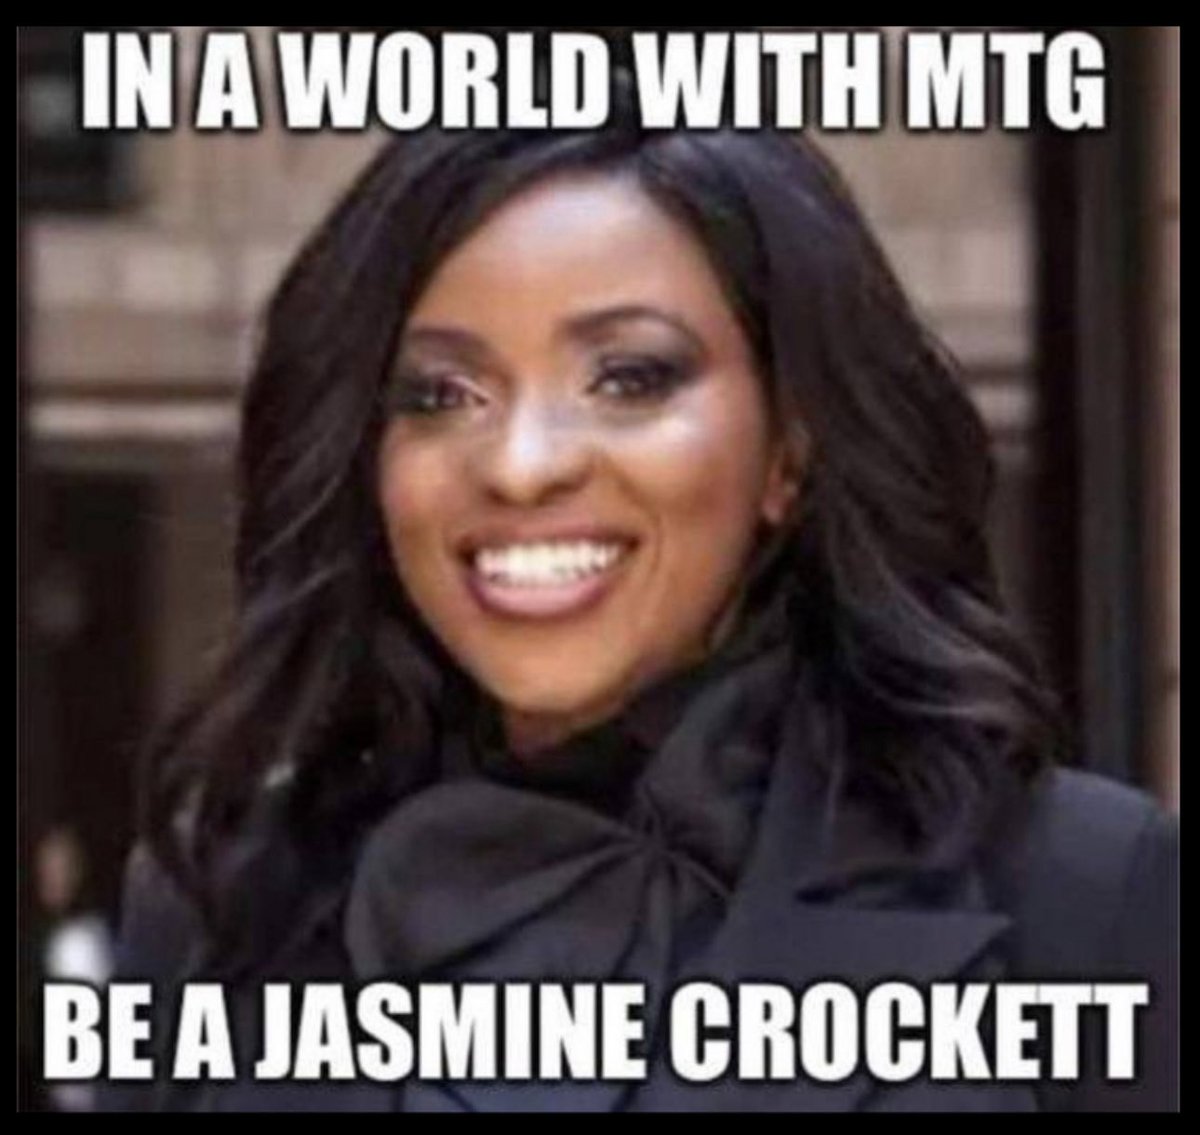 Drop a 💙 (or two) if you're impressed with Rep. Jasmine Crockett! 🙏💙💙 #VoteMTGOut @ShawnForGeorgia 💙 @RepJasmine #VoteBlueDownBallot 💙